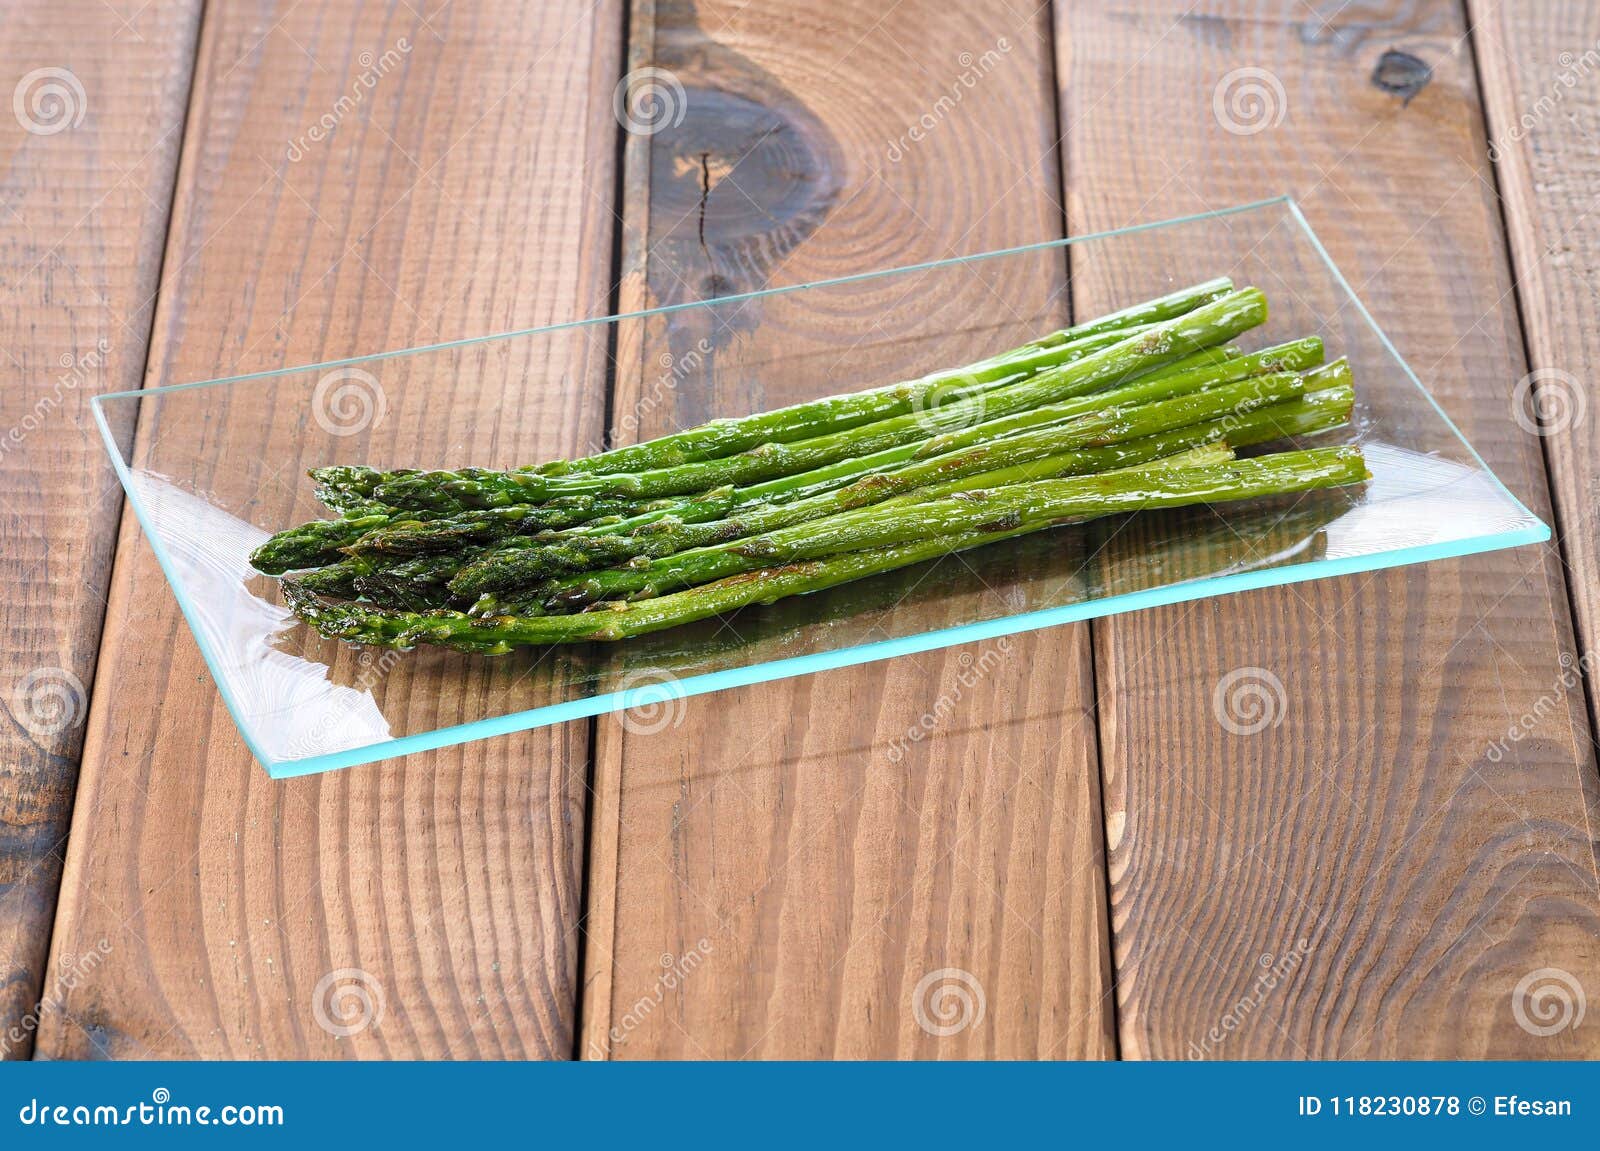 grilled asparagus Ã¢â¬â esparragos a la plancha